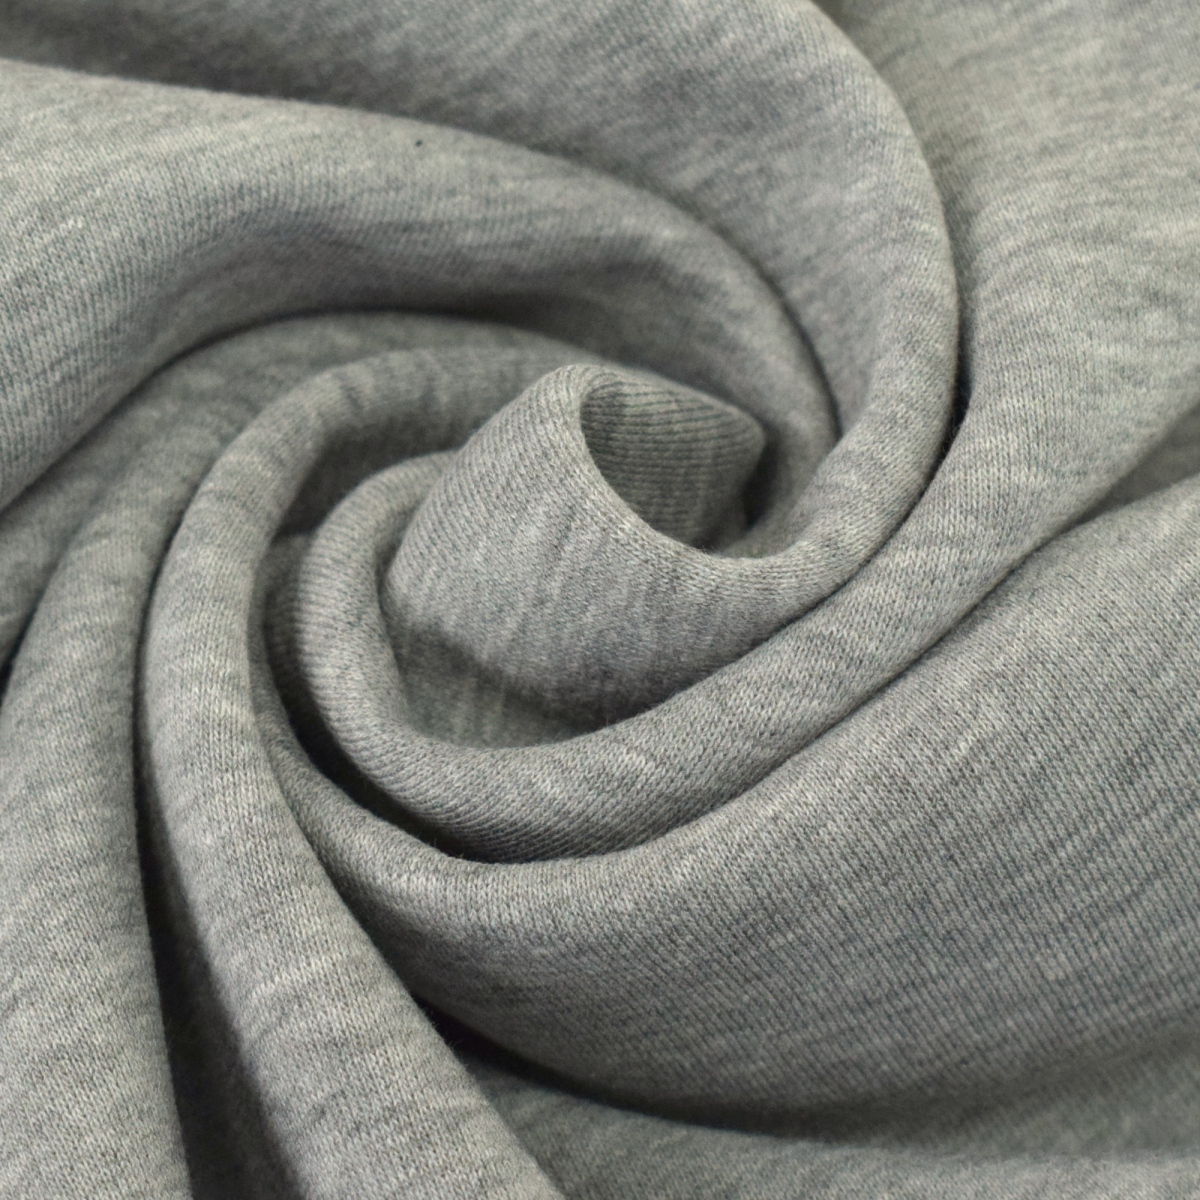 Sweatshirt fabric plain, grey